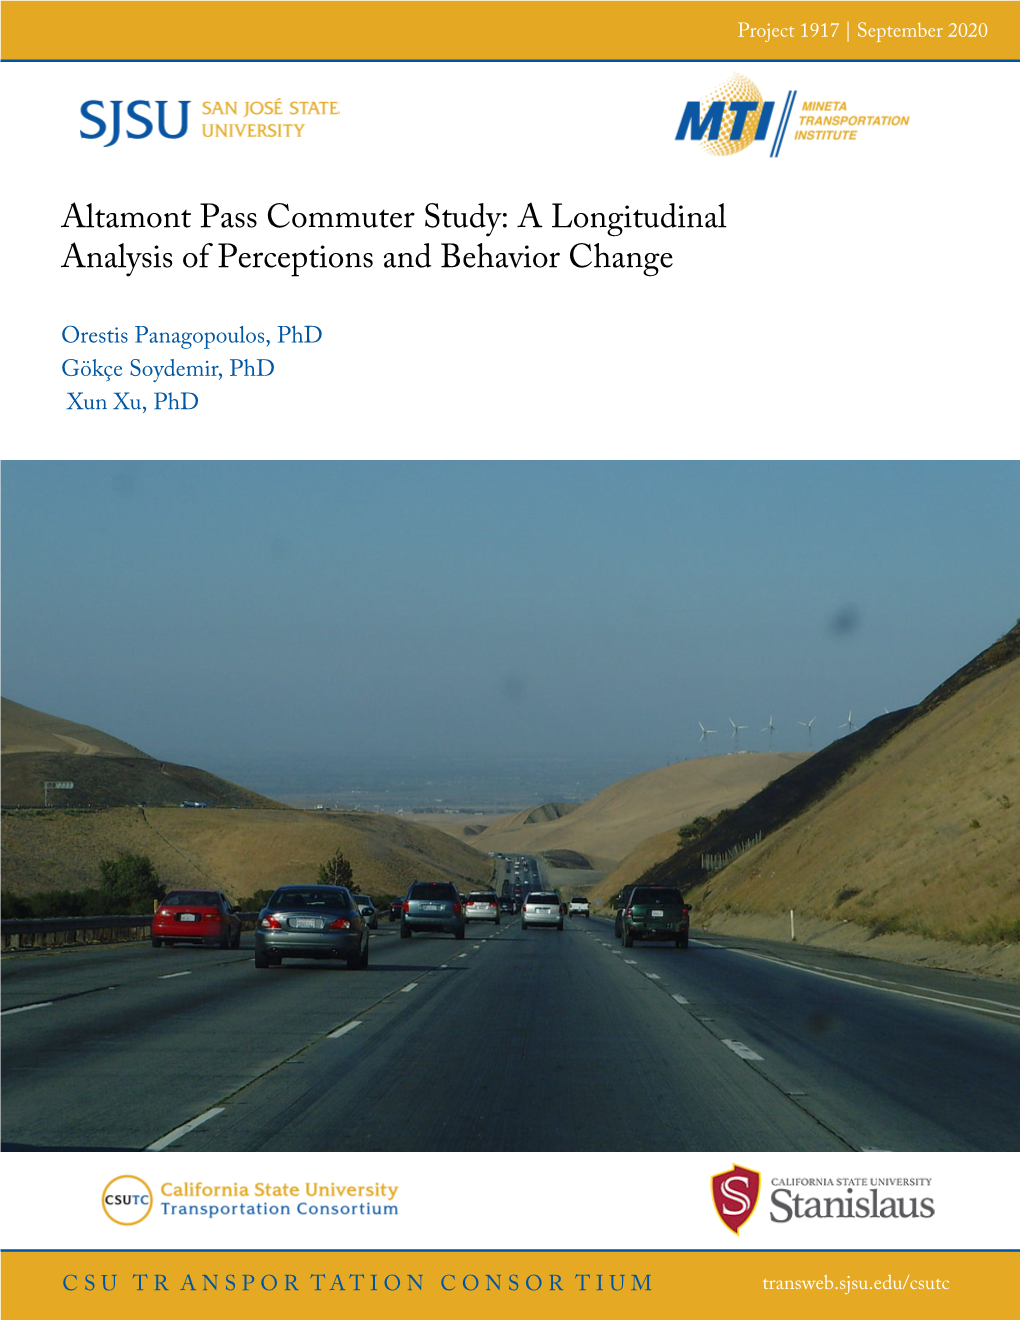 Altamont Pass Commuter Study: a Longitudinal Analysis of Perceptions and Behavior Change